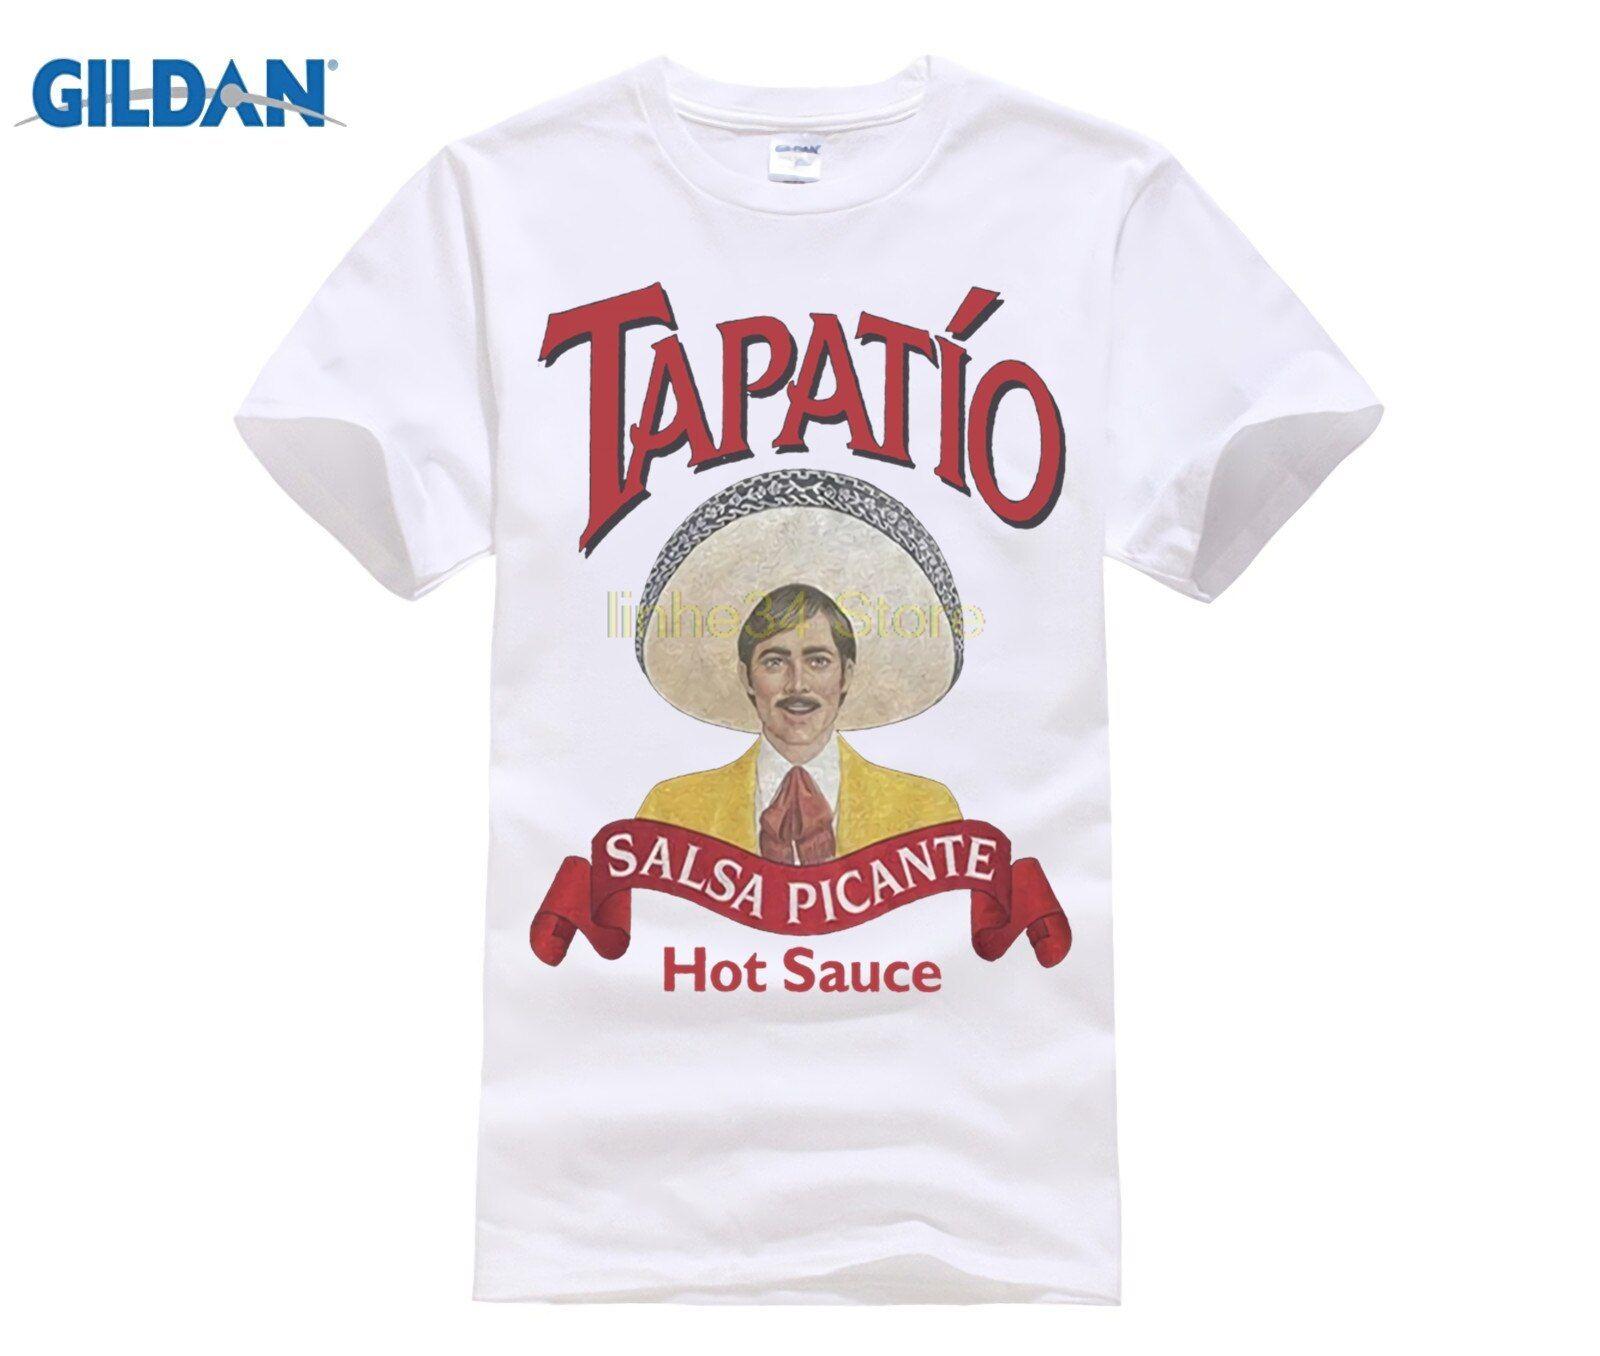 Tapatio Logo - US $11.99. Gildan Tapatio Salsa Picante Original Logo Mens Graphic T Shirt In T Shirts From Men's Clothing On Aliexpress.com